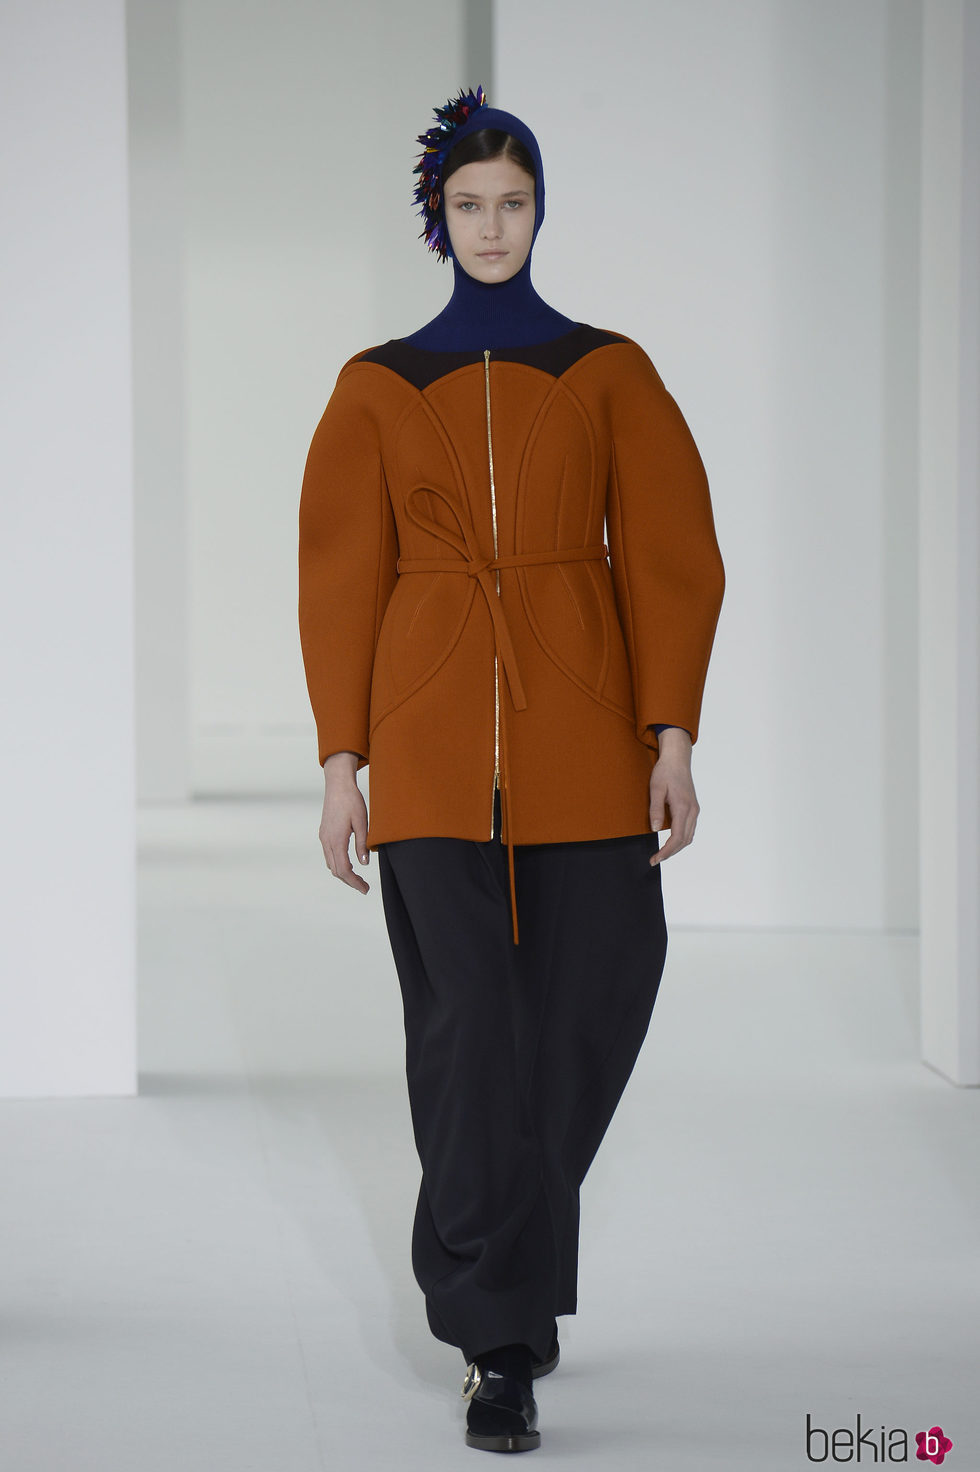 Chaqueta naranja de Delpozo otoño/invierno 2017/2018 en la New York Fashion Week